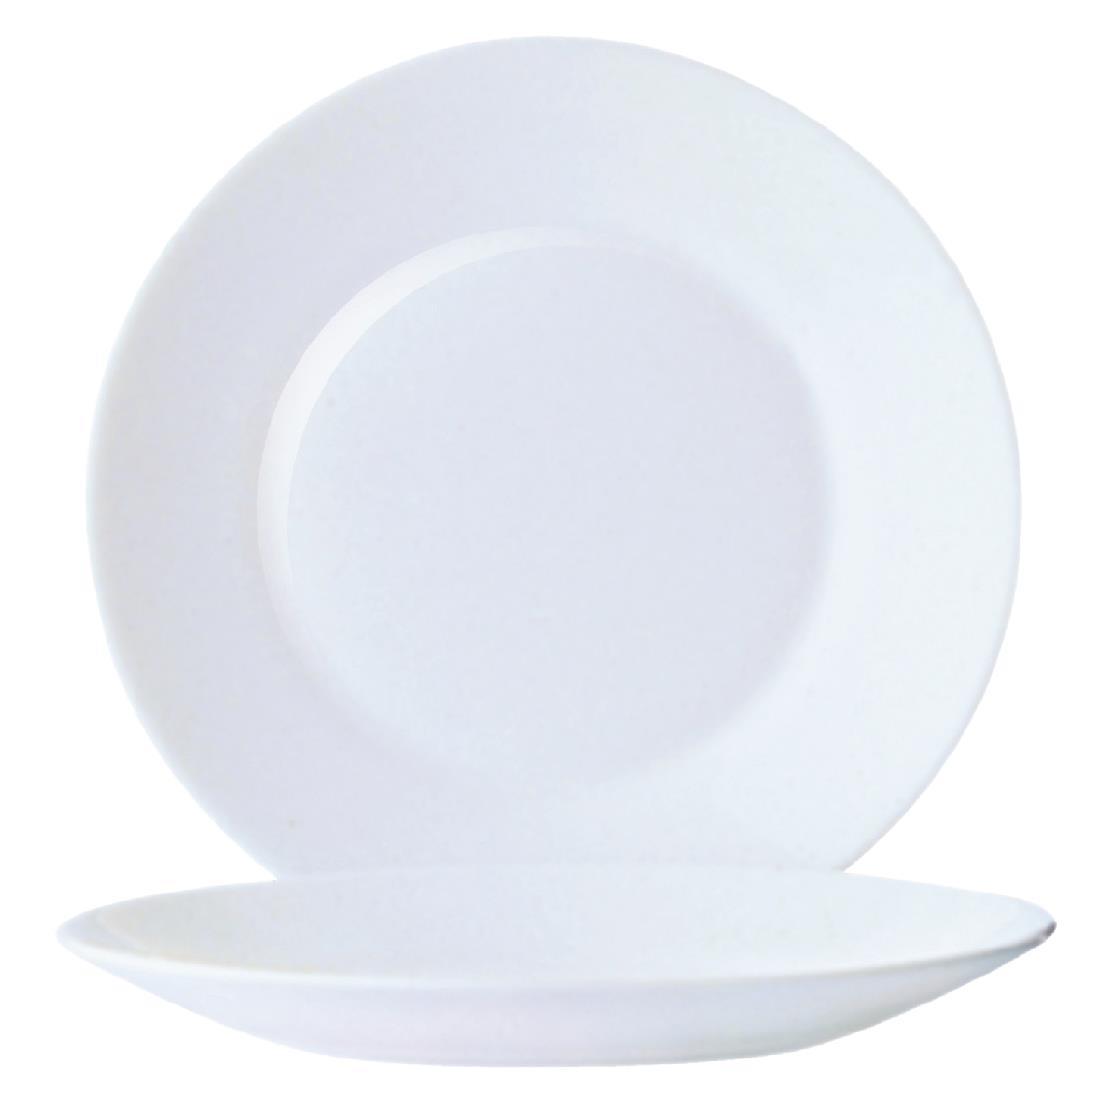 Arcoroc Opal Restaurant Wide Rim Plates 155mm (Pack of 6) - DP067  - 1